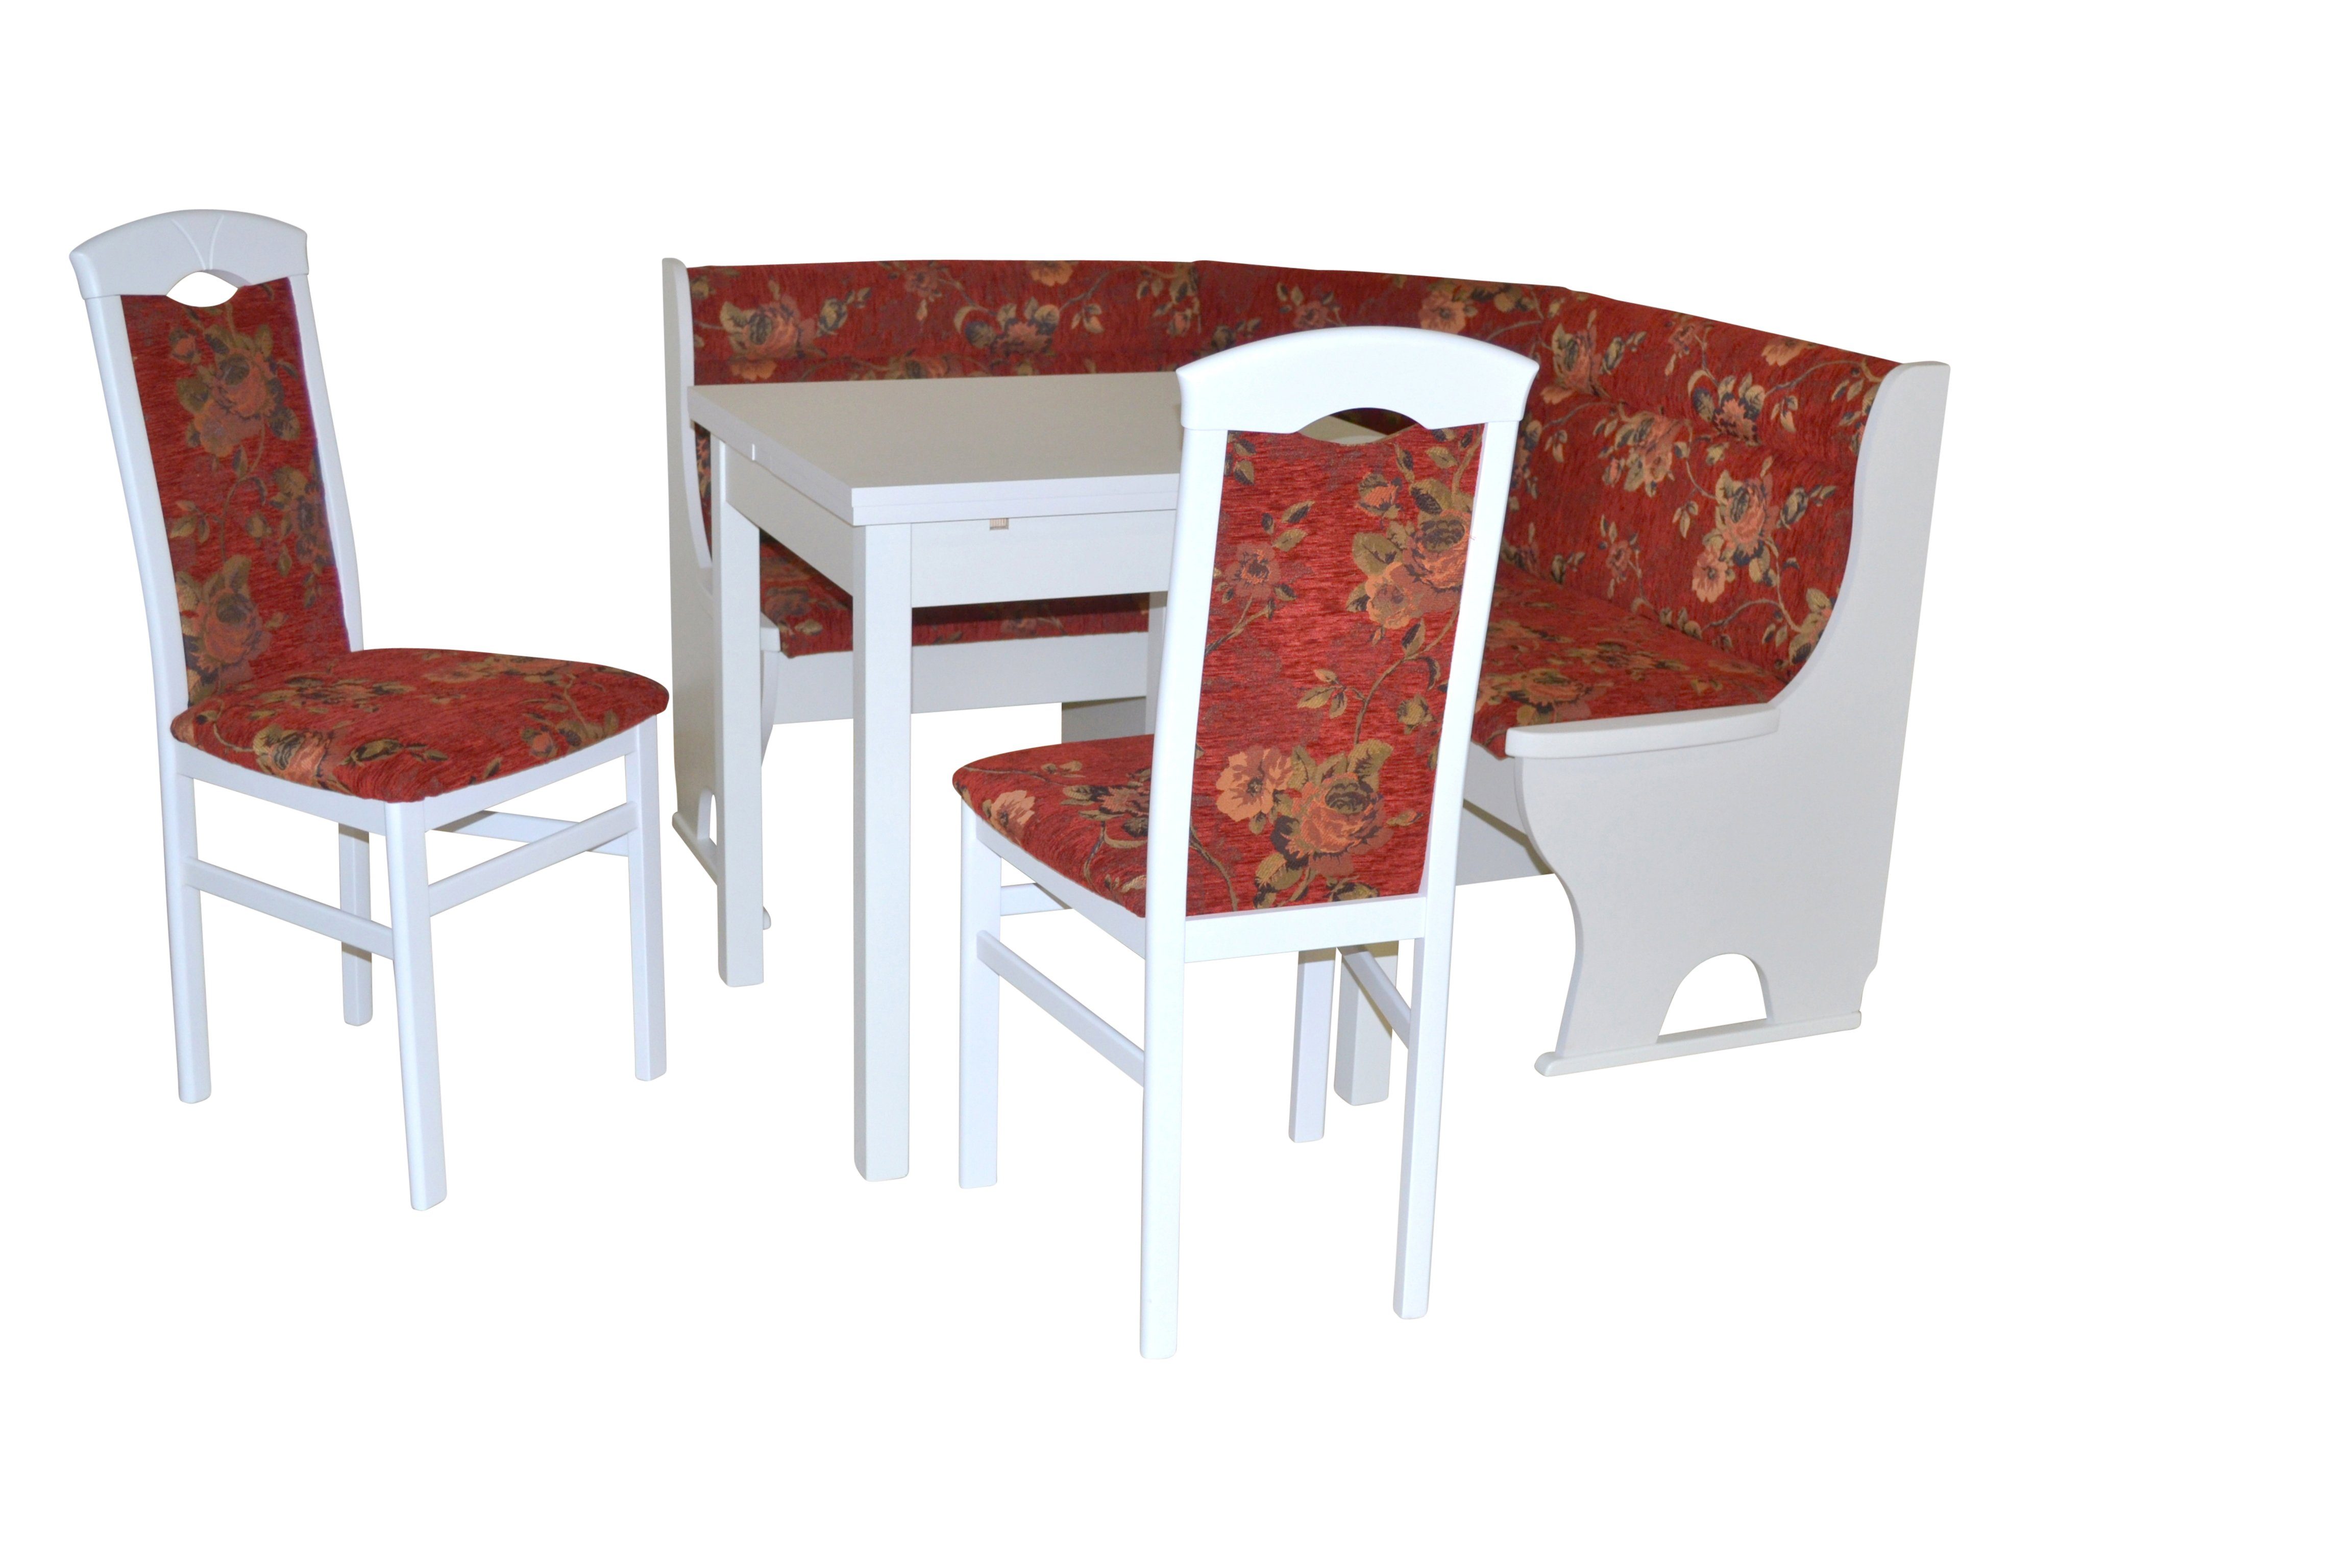 Sitzflächen hochwertiger Gasdruckfeder rot (Spar-Set, Anja 4tlg. Set), I, Eckbankgruppe moebel-direkt-online mit